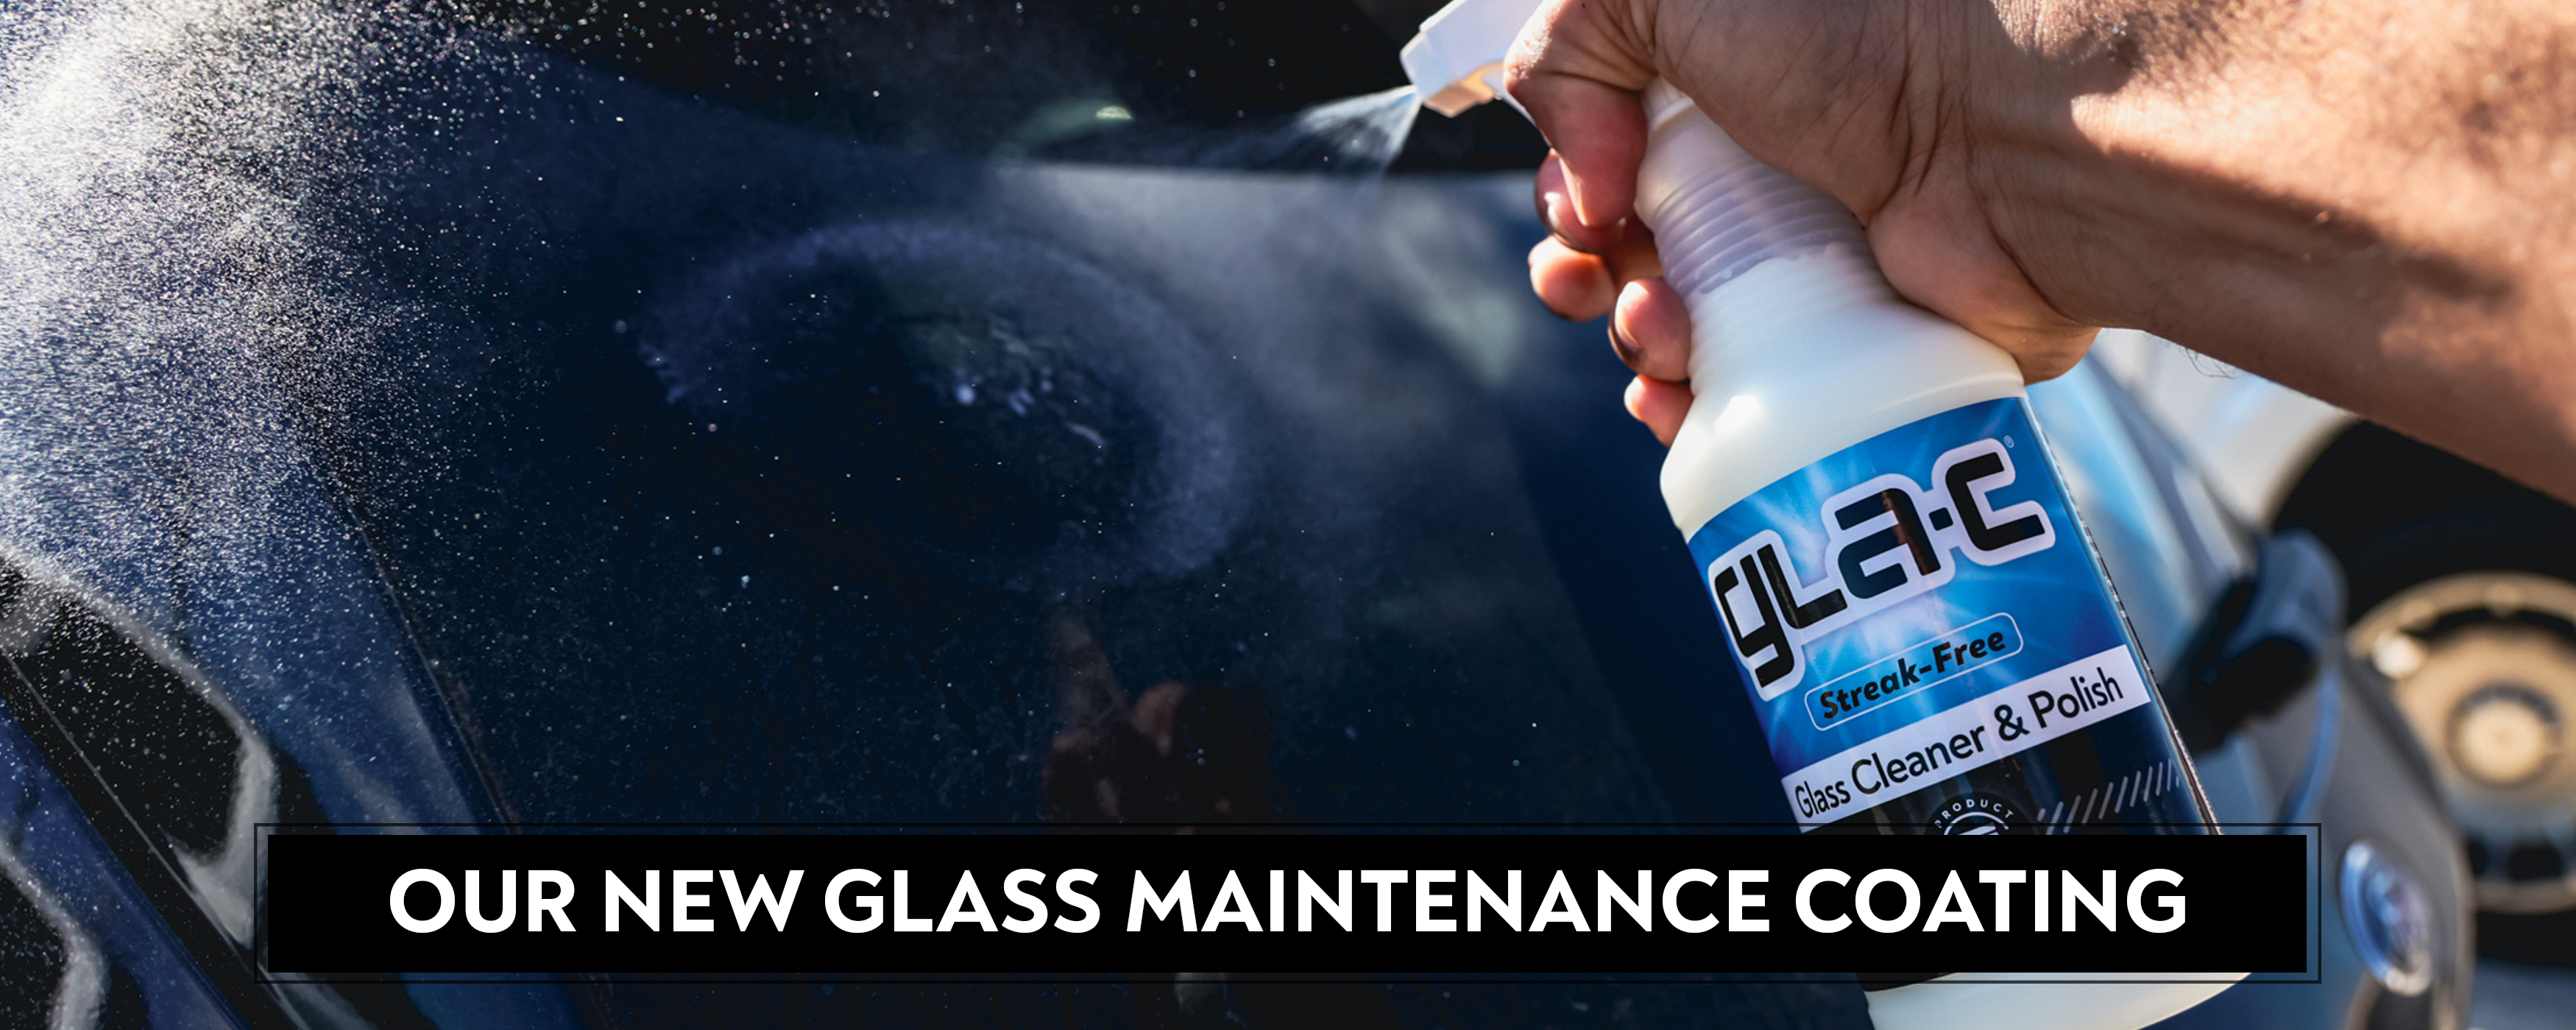 TopCoat Releases All New "Gla-C®" Glass Maintenance Coating